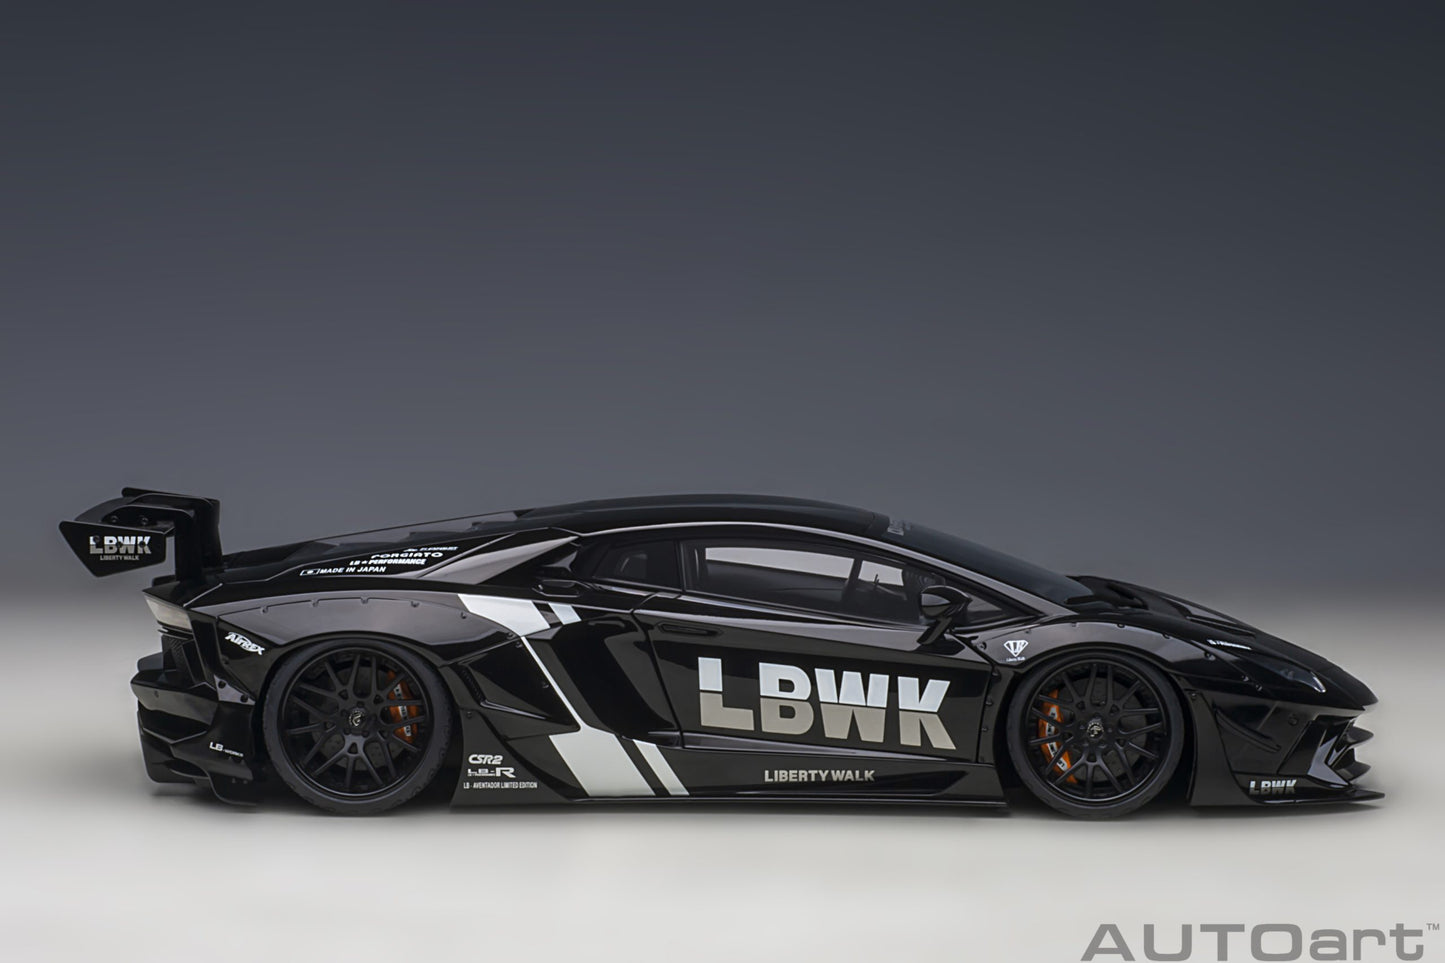 AUTOart 1:18 Liberty Walk LB-Works Lamborghini Aventador Limited Edition (LBWK Livery) 79244